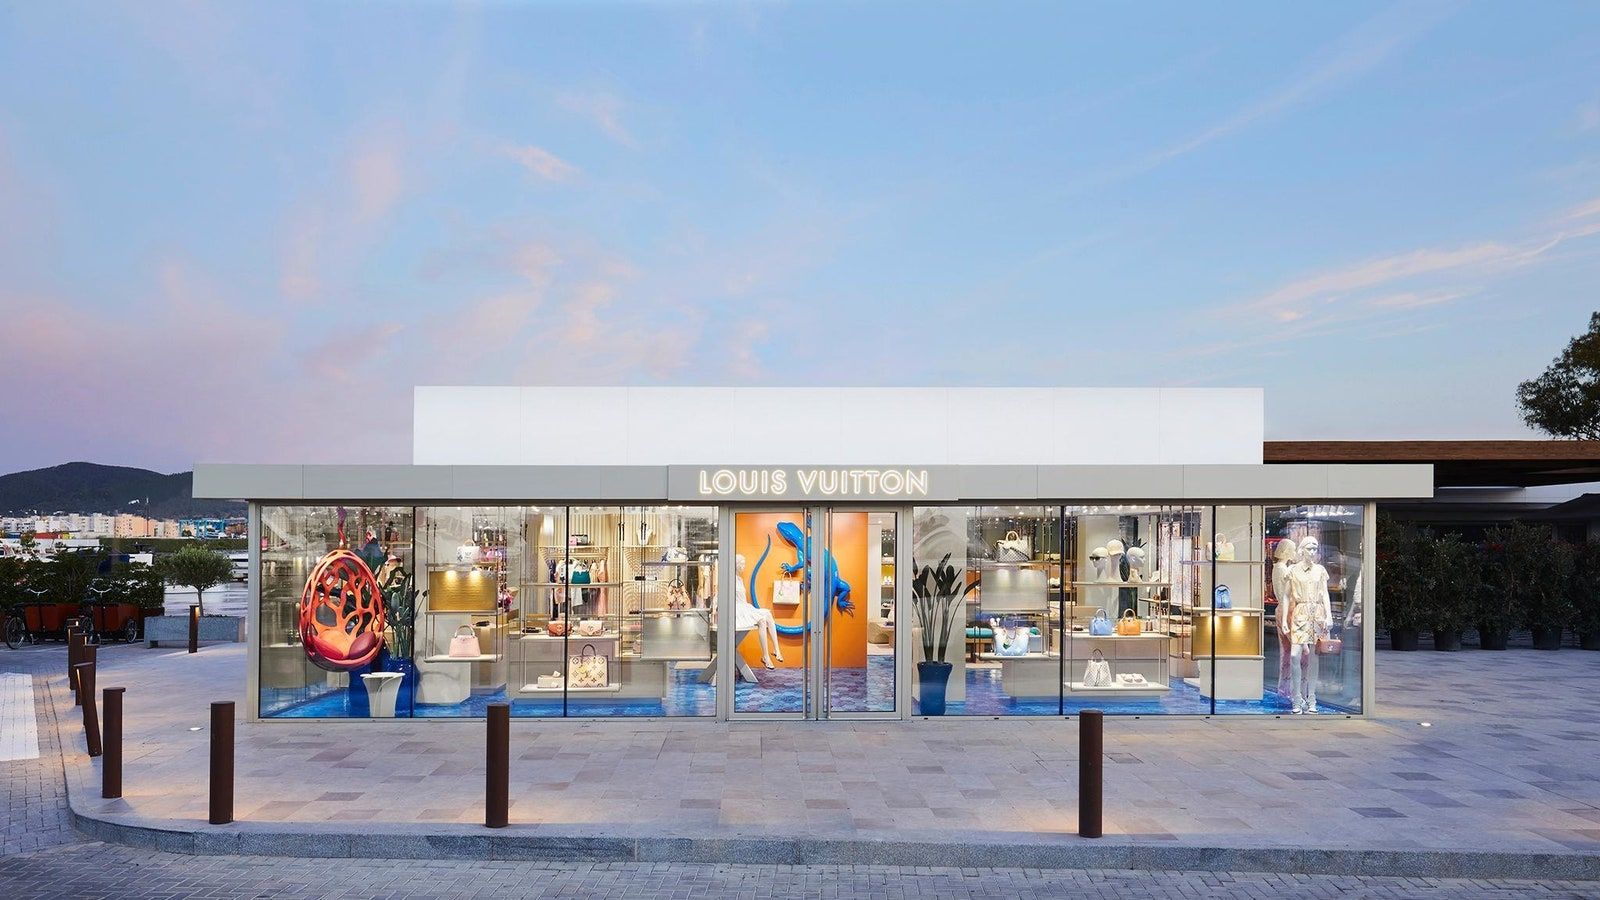 LV Clouds' fashion art -Explore our Modern Pop Art Collection!